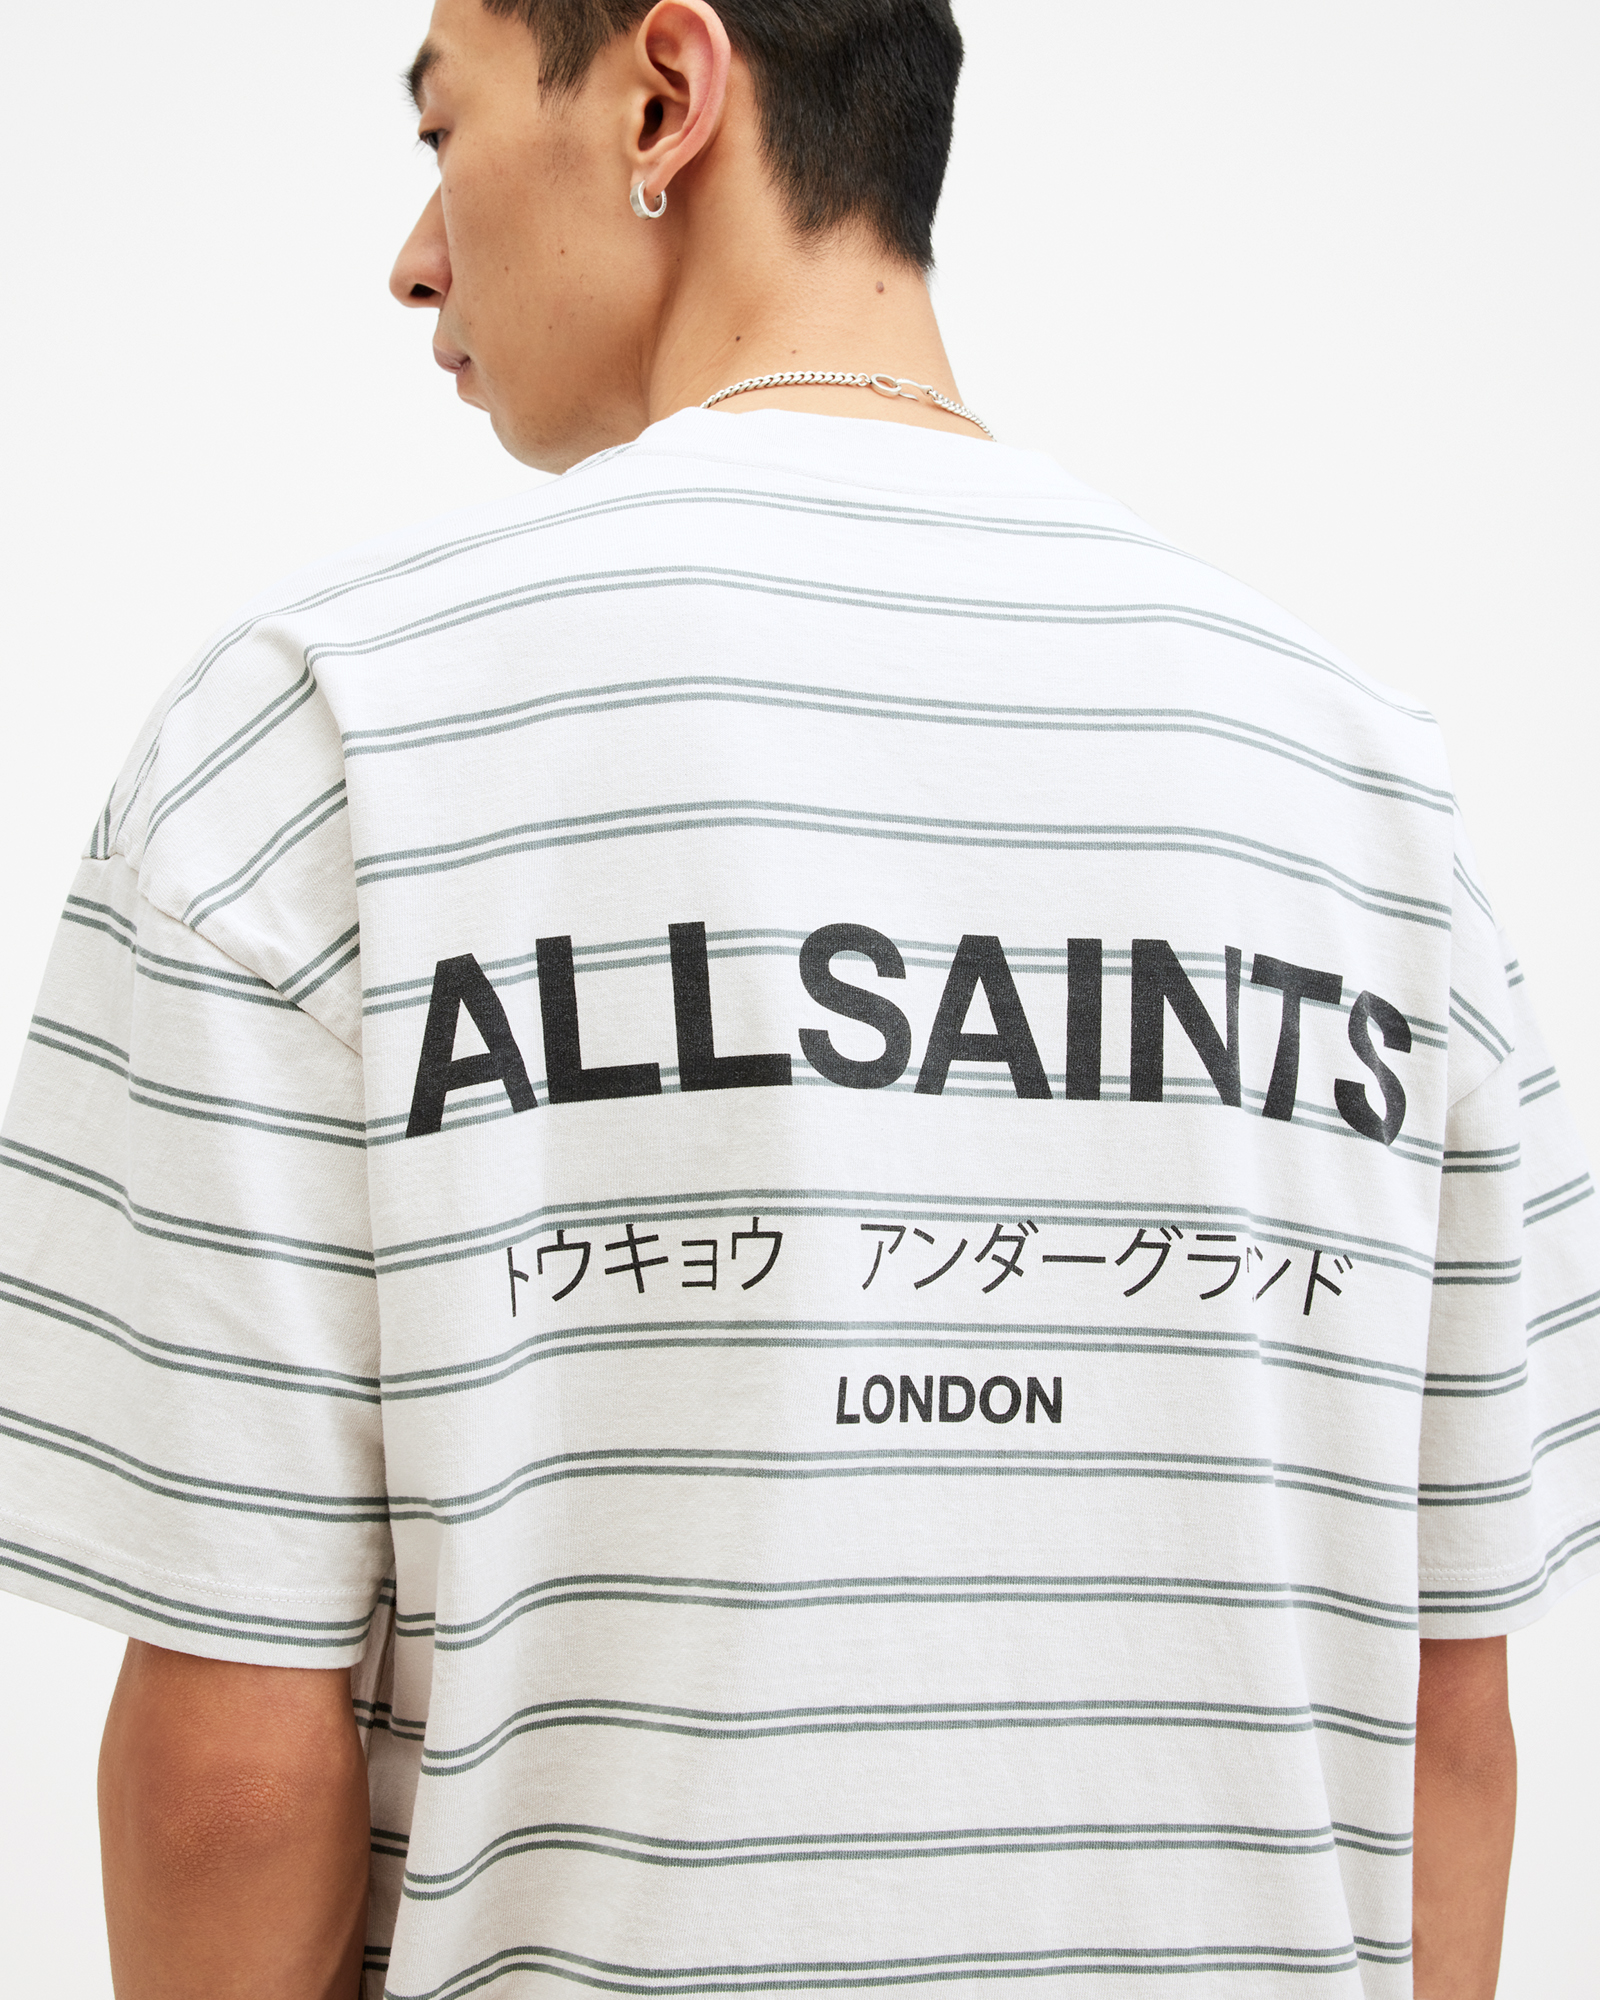 AllSaints Underground Oversized Striped T-Shirt,, SPECKLE GRY/GREY